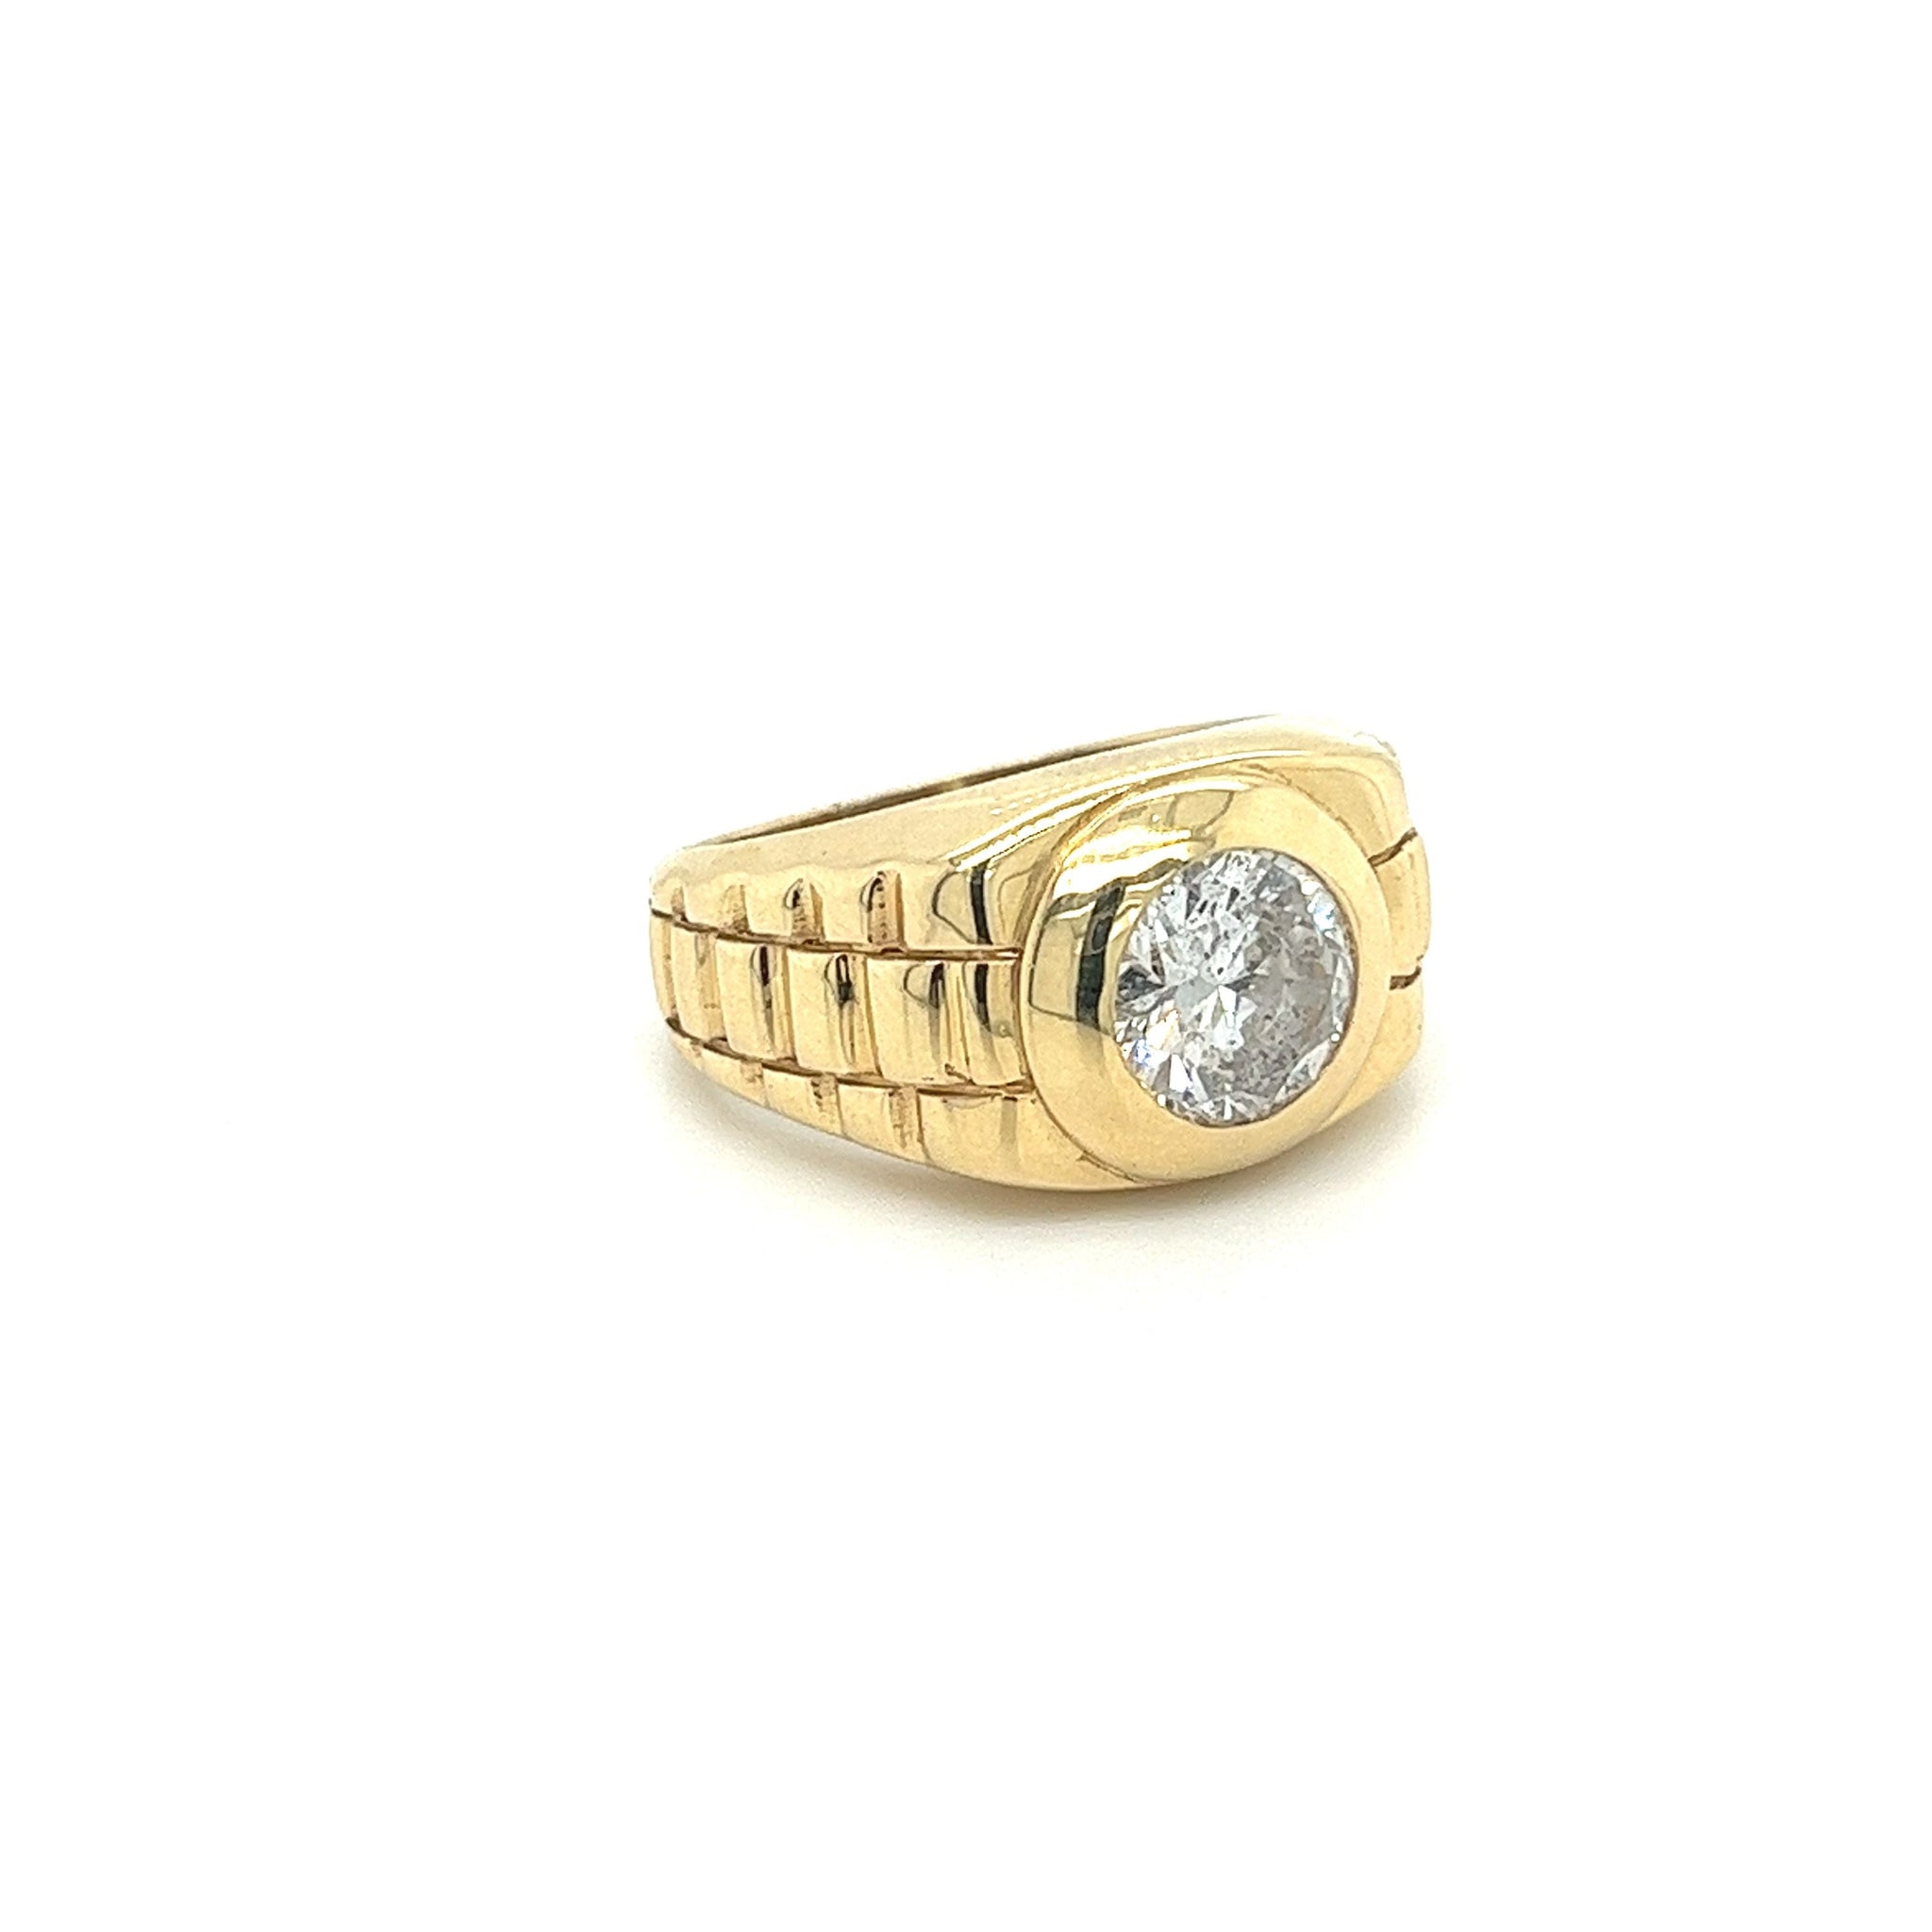 Men's Natural 1.70 Carat Round Cut Diamond In 14K Gold Bezel Set Ring-Diamond Ring-ASSAY